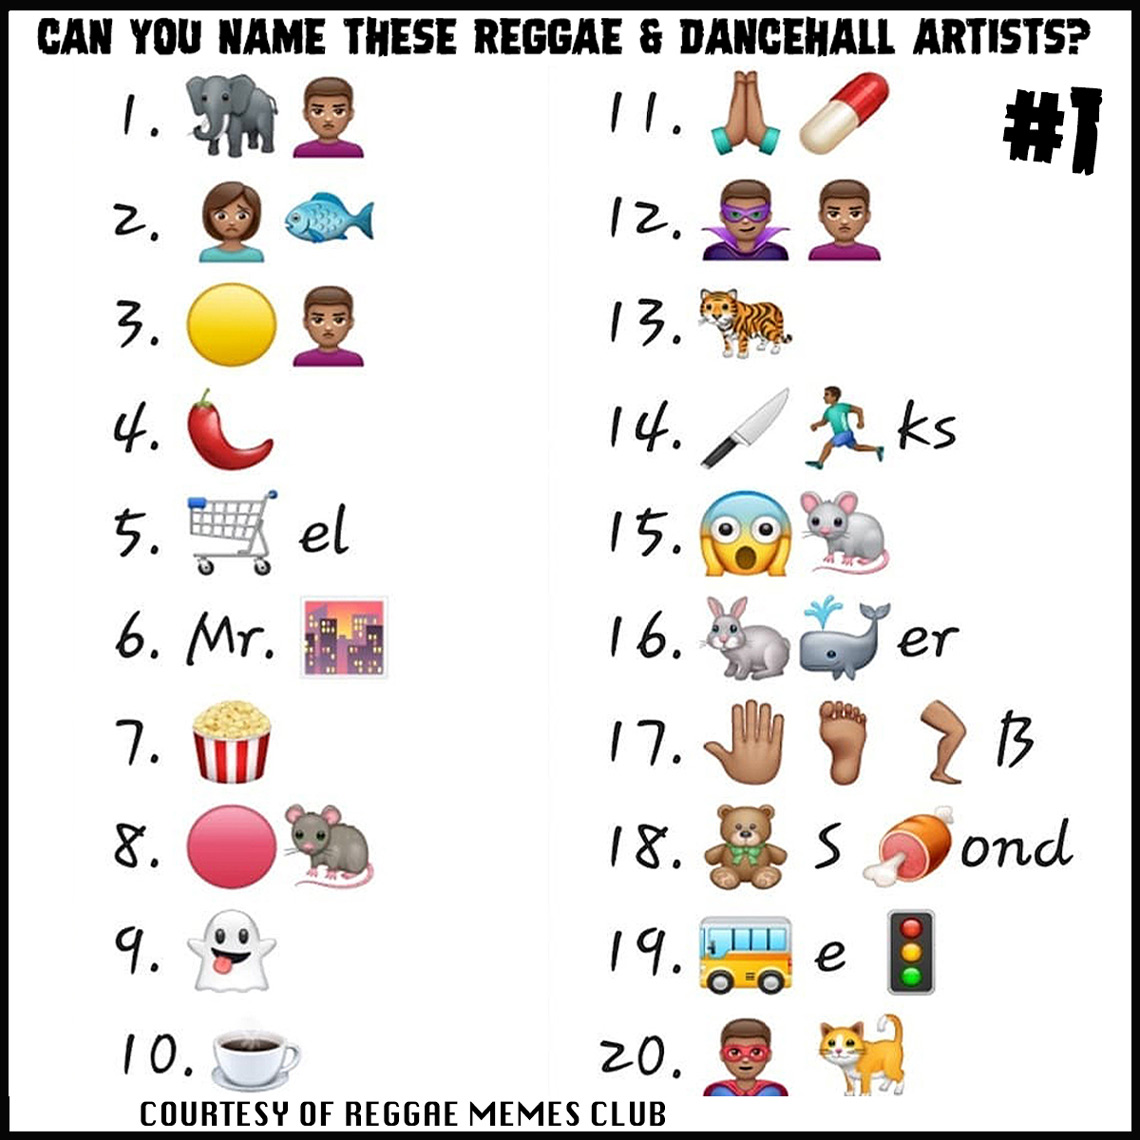 vagabond quagga marmelade Emoji Music Quiz - Can You Name These 44 Reggae & Dancehall Artists?